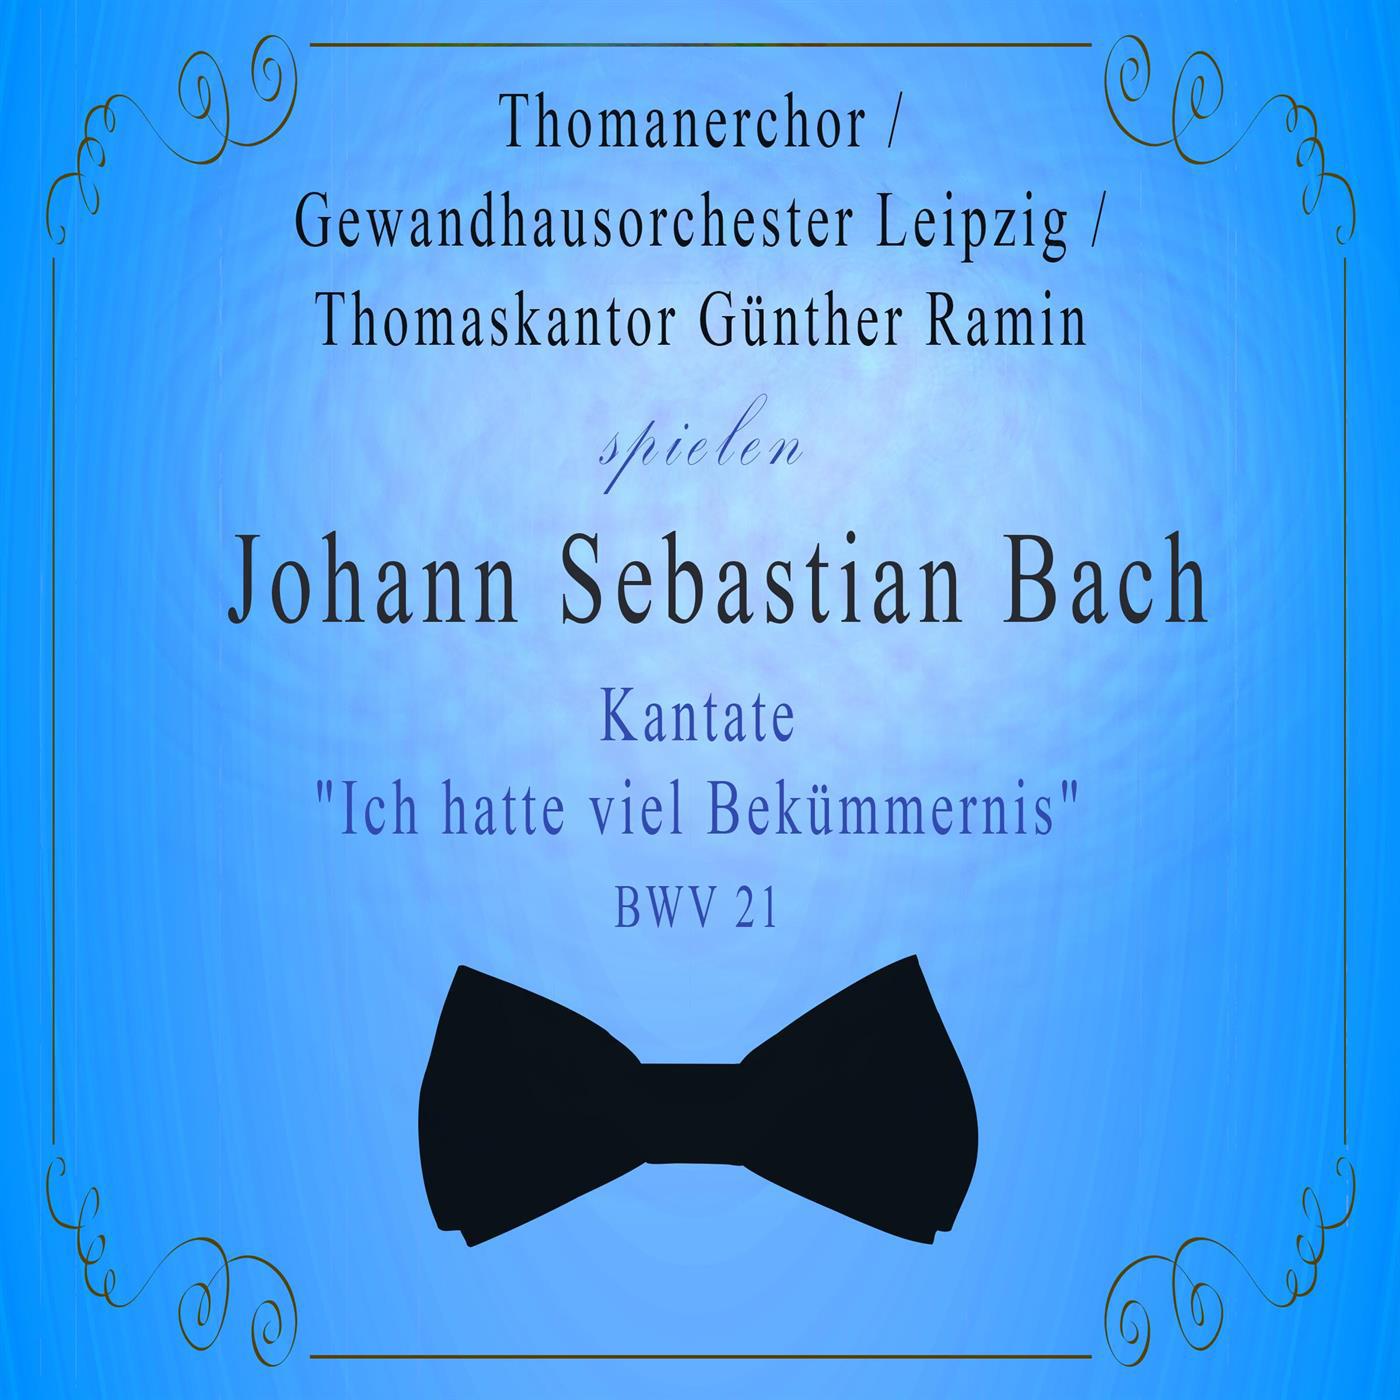 Thomanerchor / Gewandhausorchester Leipzig / Thomaskantor Günther Ramin spielen: Johann Sebastian Ba专辑